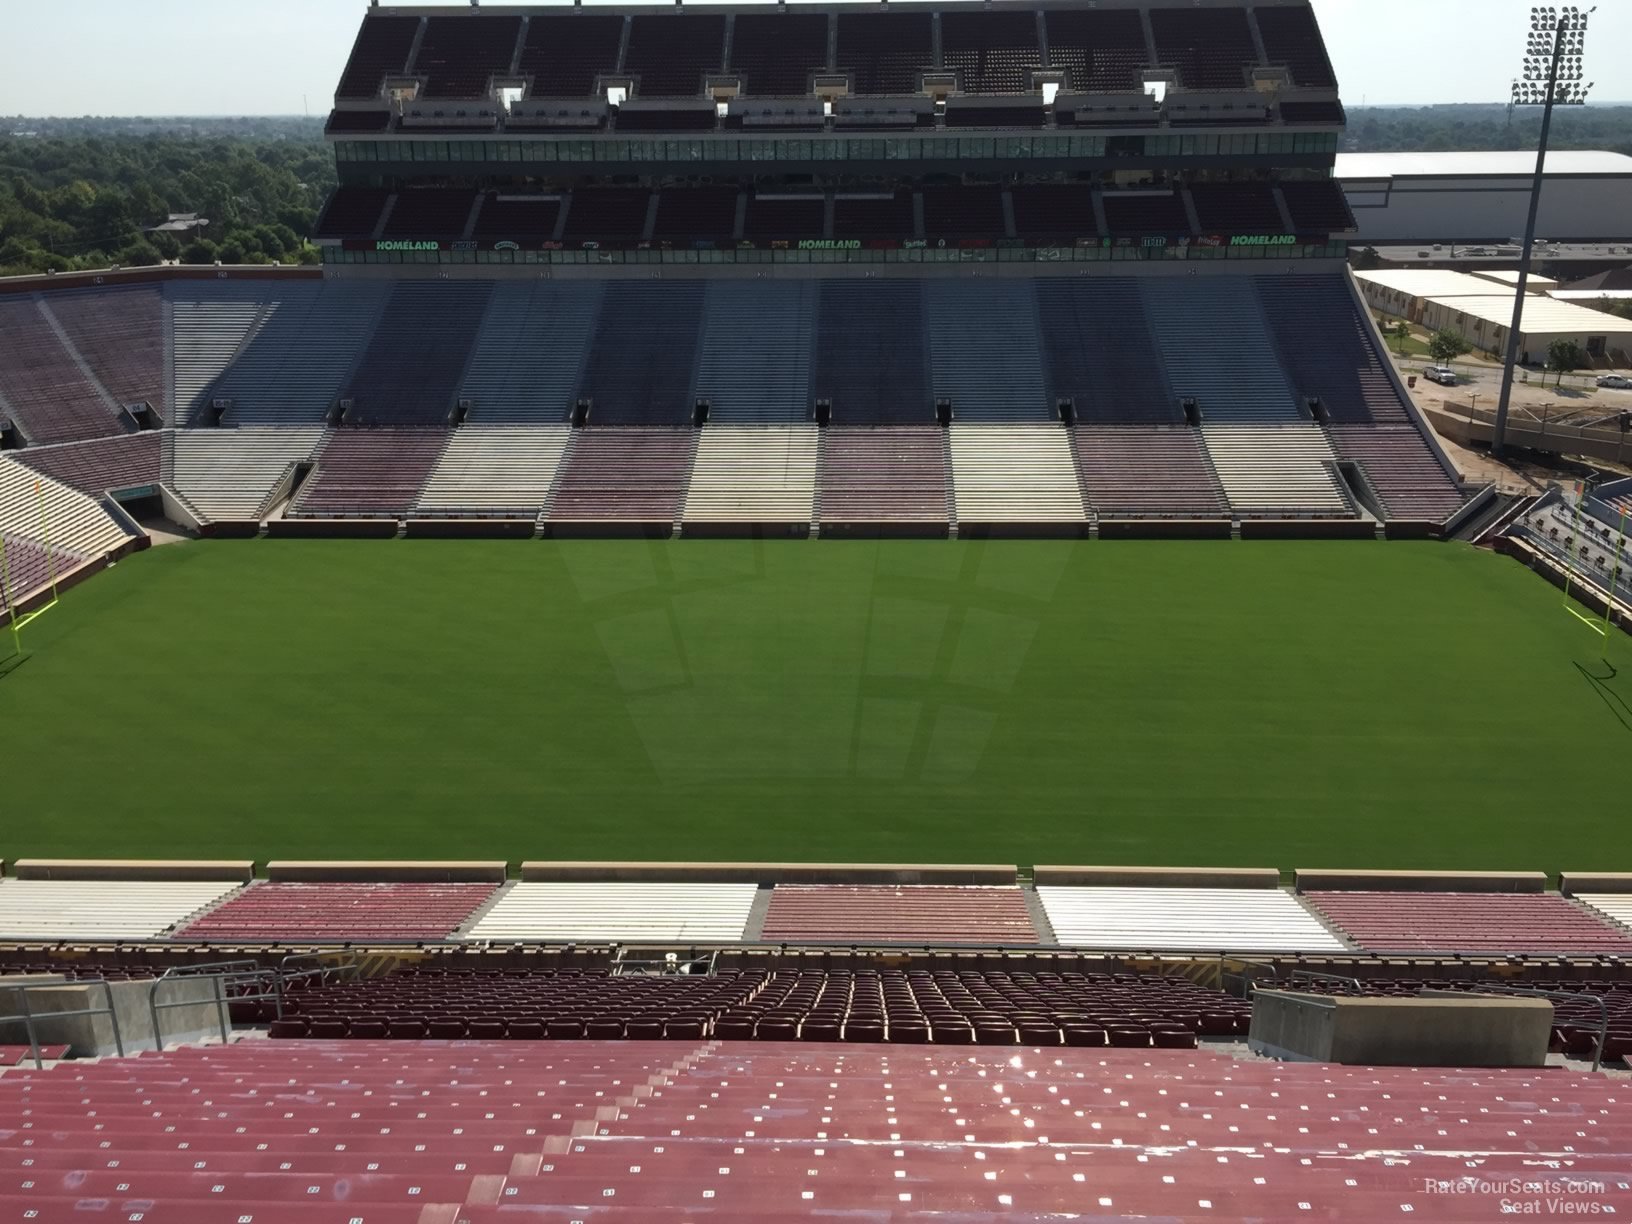 section 105, row 35 seat view  - oklahoma memorial stadium